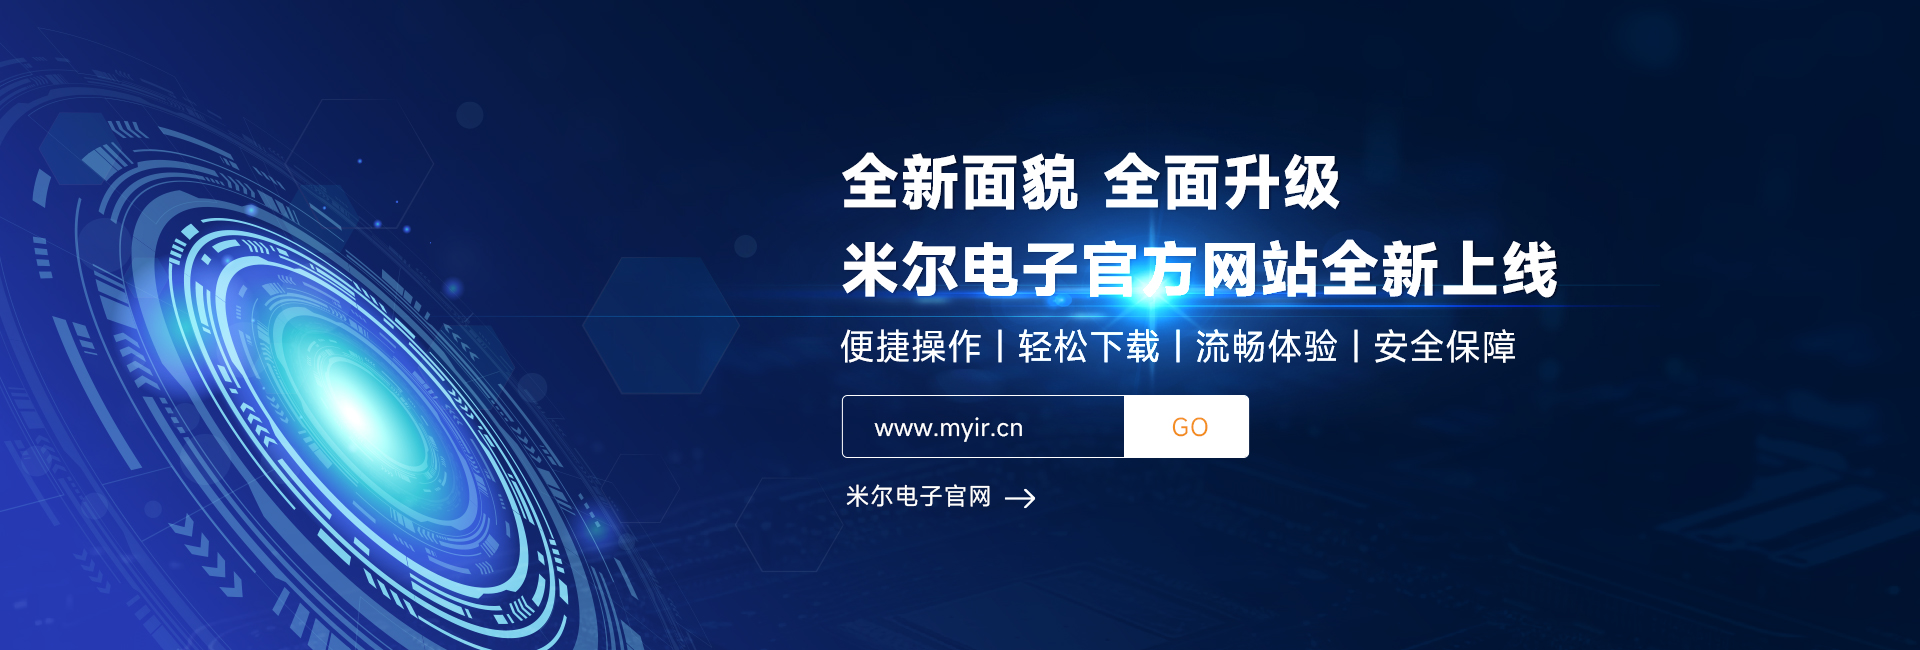 www.myir.cn